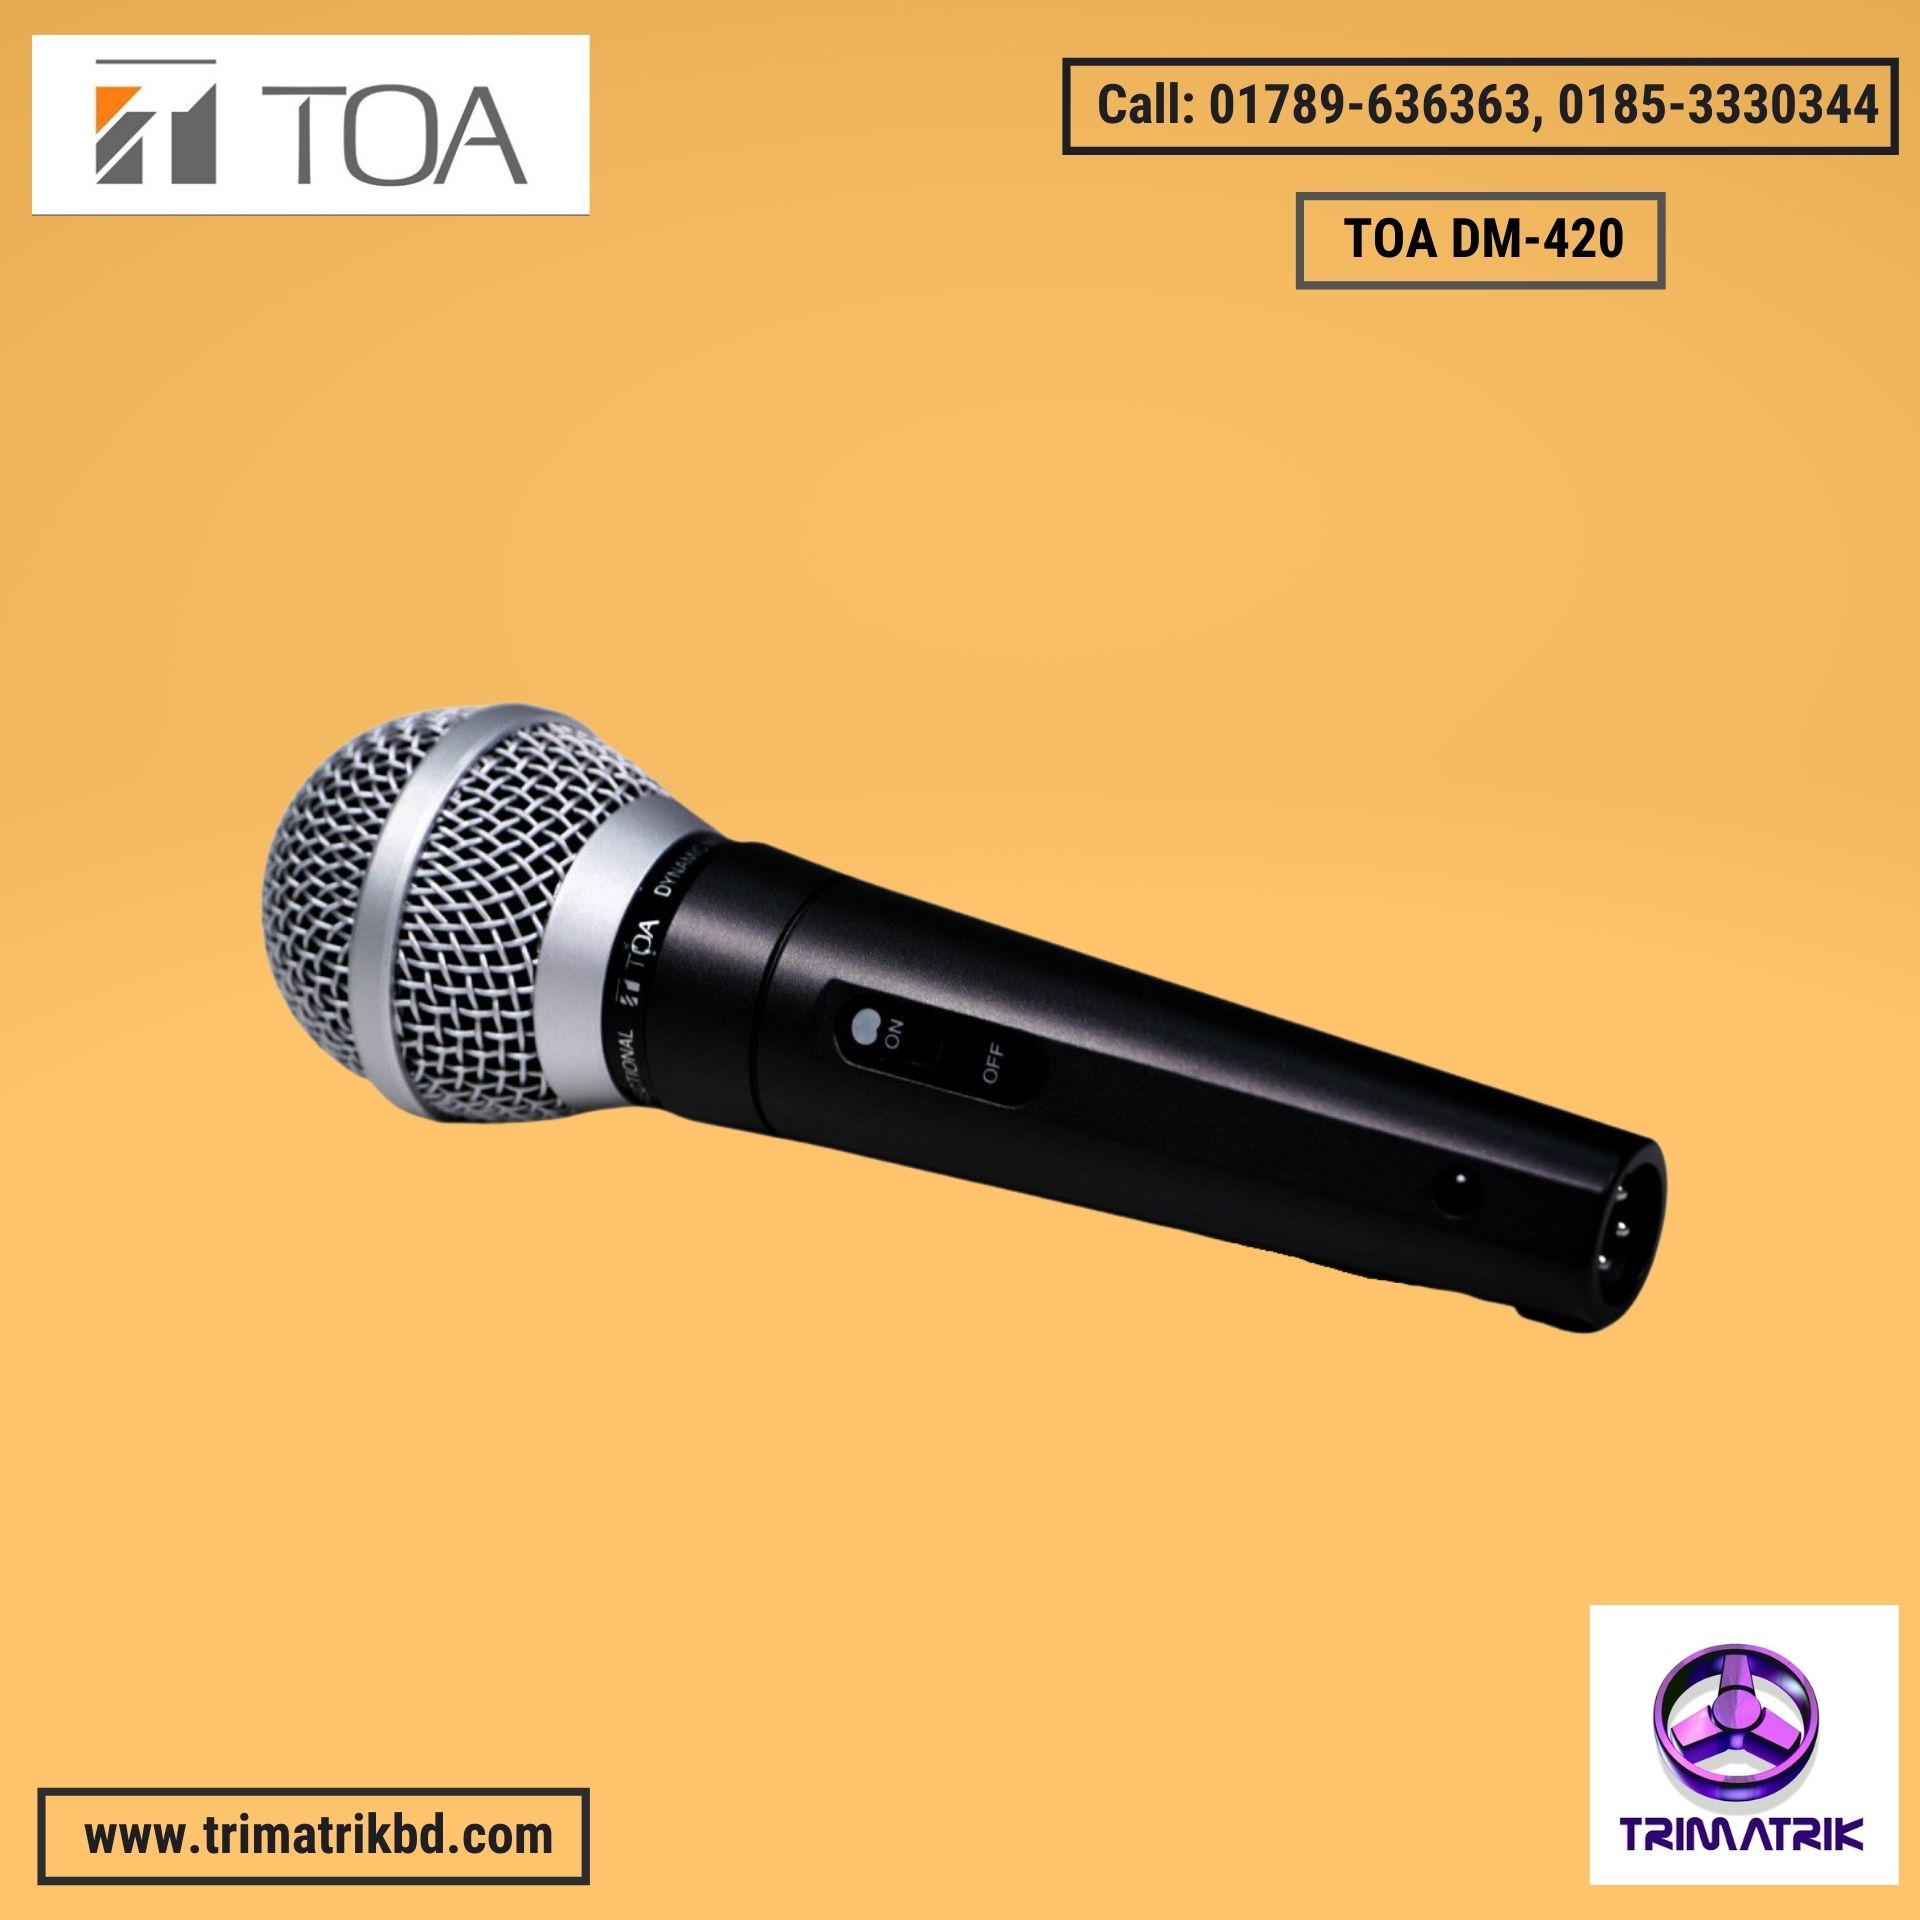 TOA DM-420 Dynamic Microphone, toa bangladesh, trimatrik